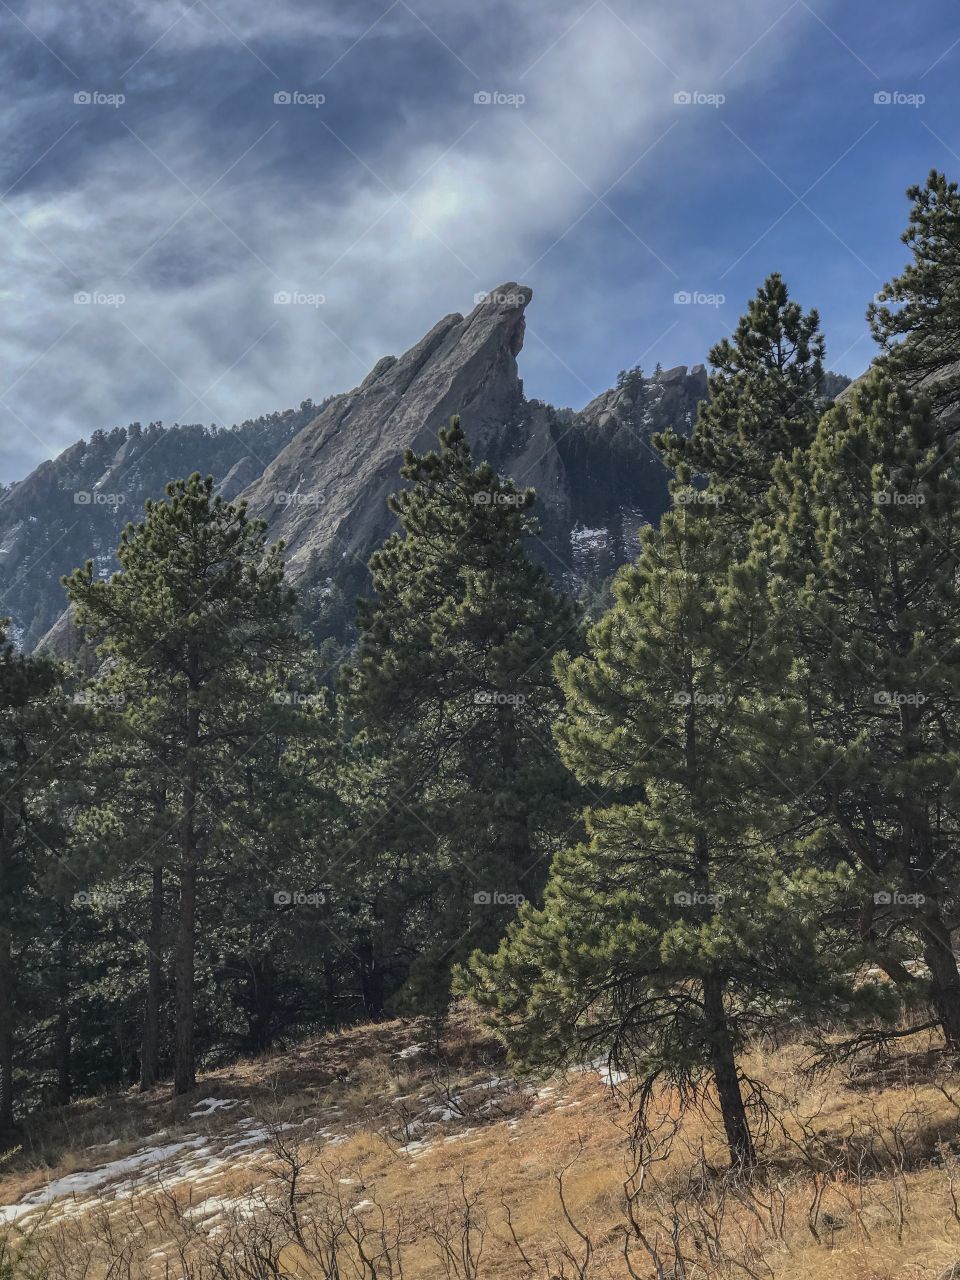 Boulder, Colorado’s iconic Flatiron mountains. 